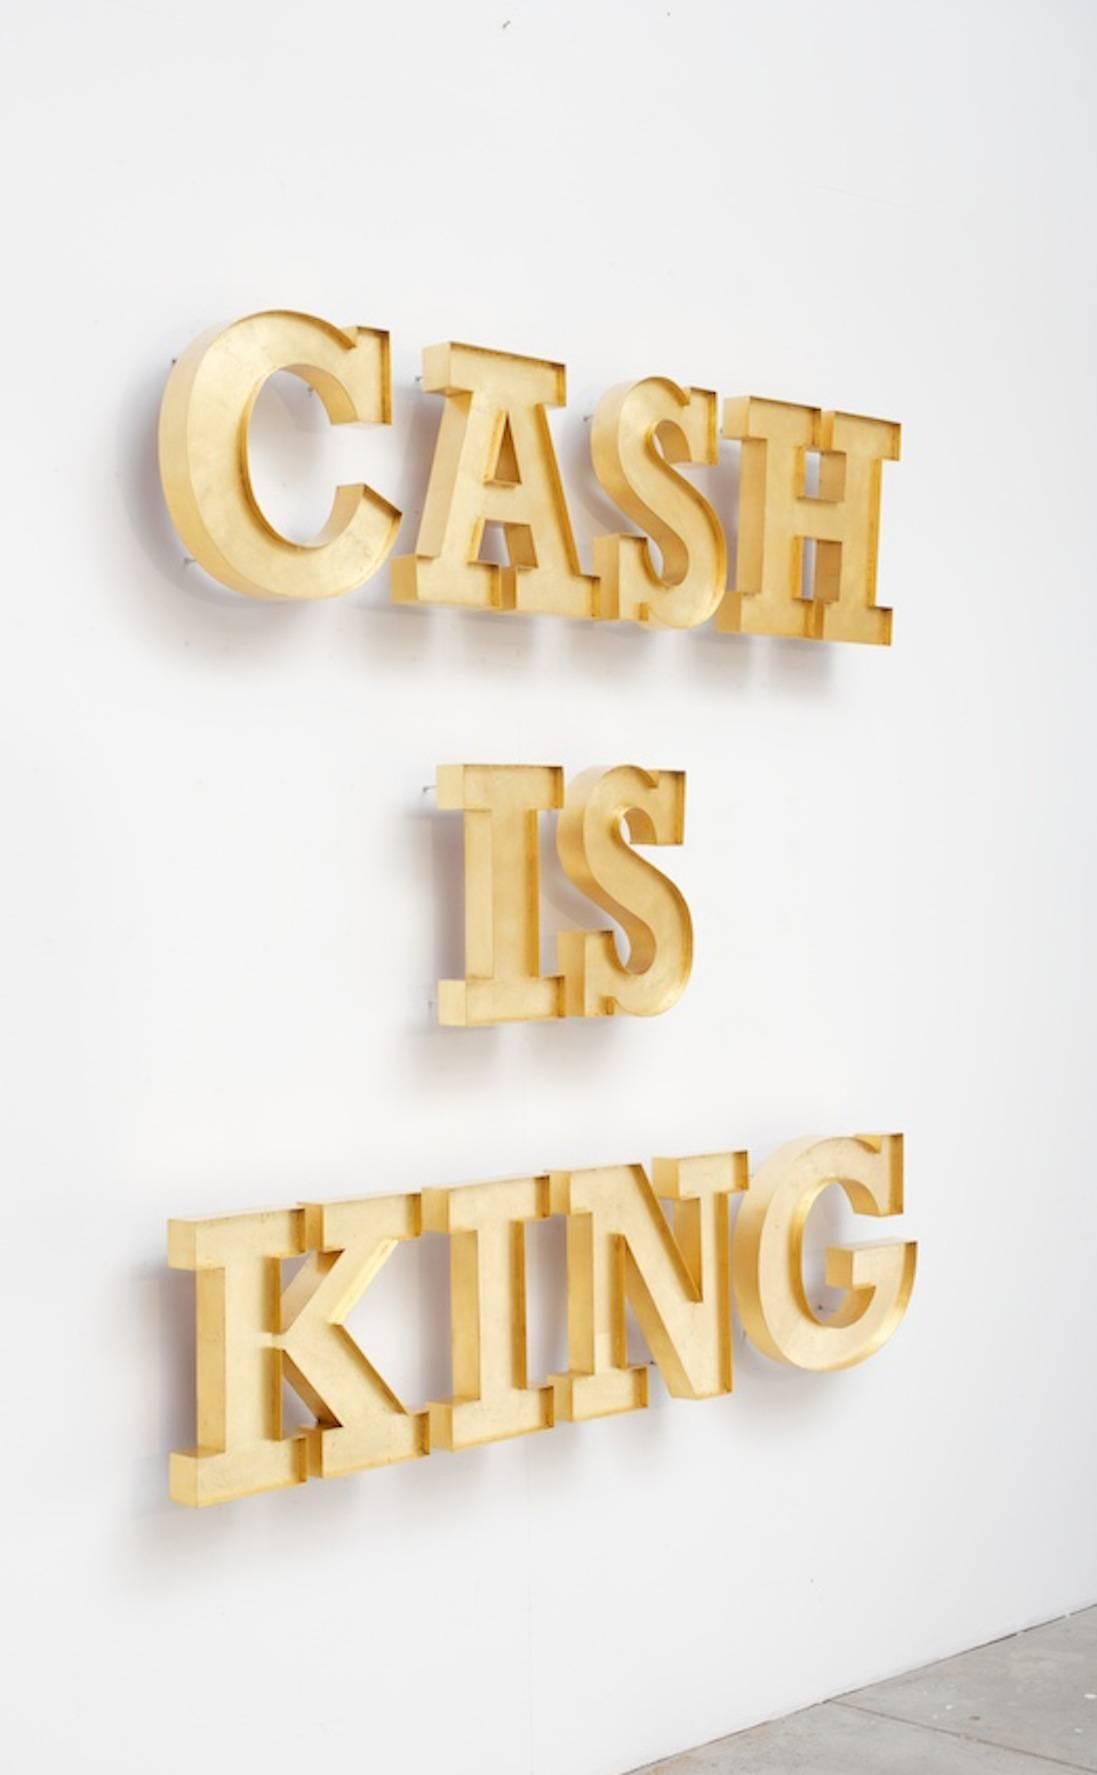 CASH IS KING - Sculpture by Brett Murray